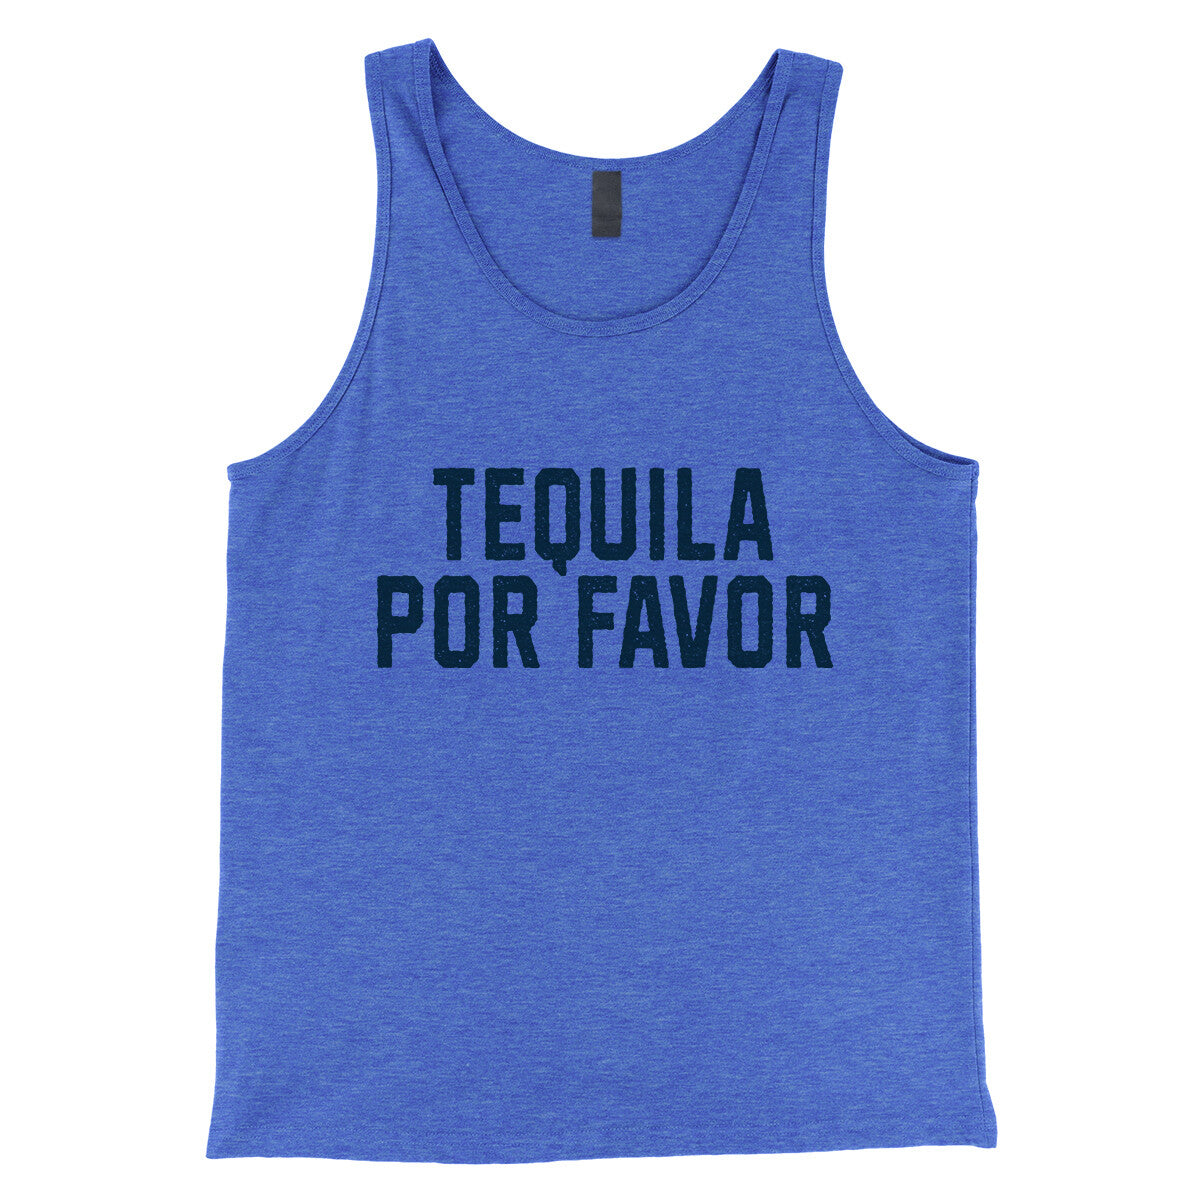 Tequila Por Favor in True Royal TriBlend Color